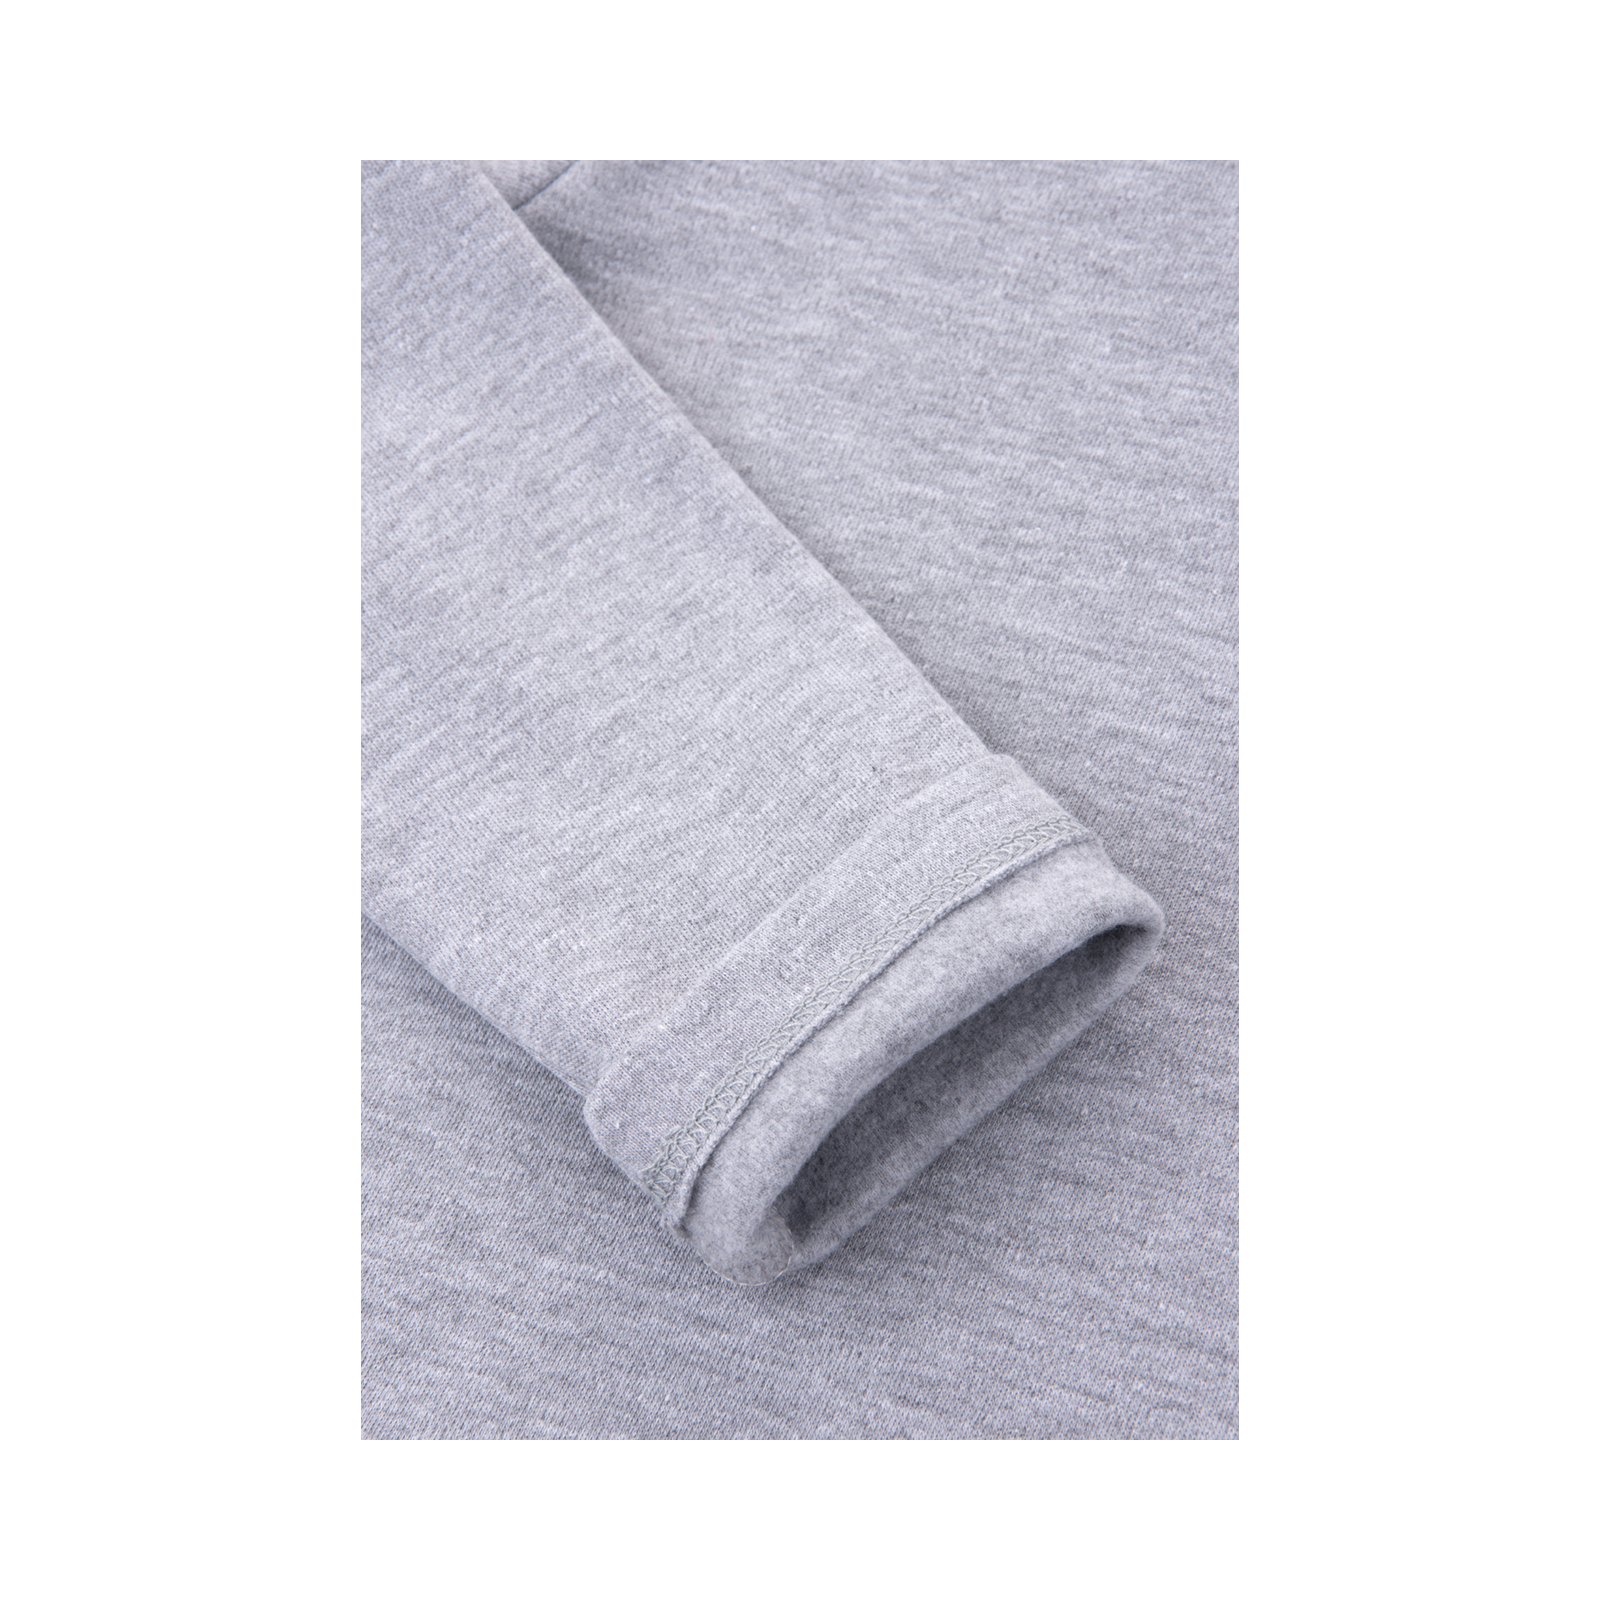 Кофта Lovetti водолазка серая меланжевая (1013-146-gray) изображение 4